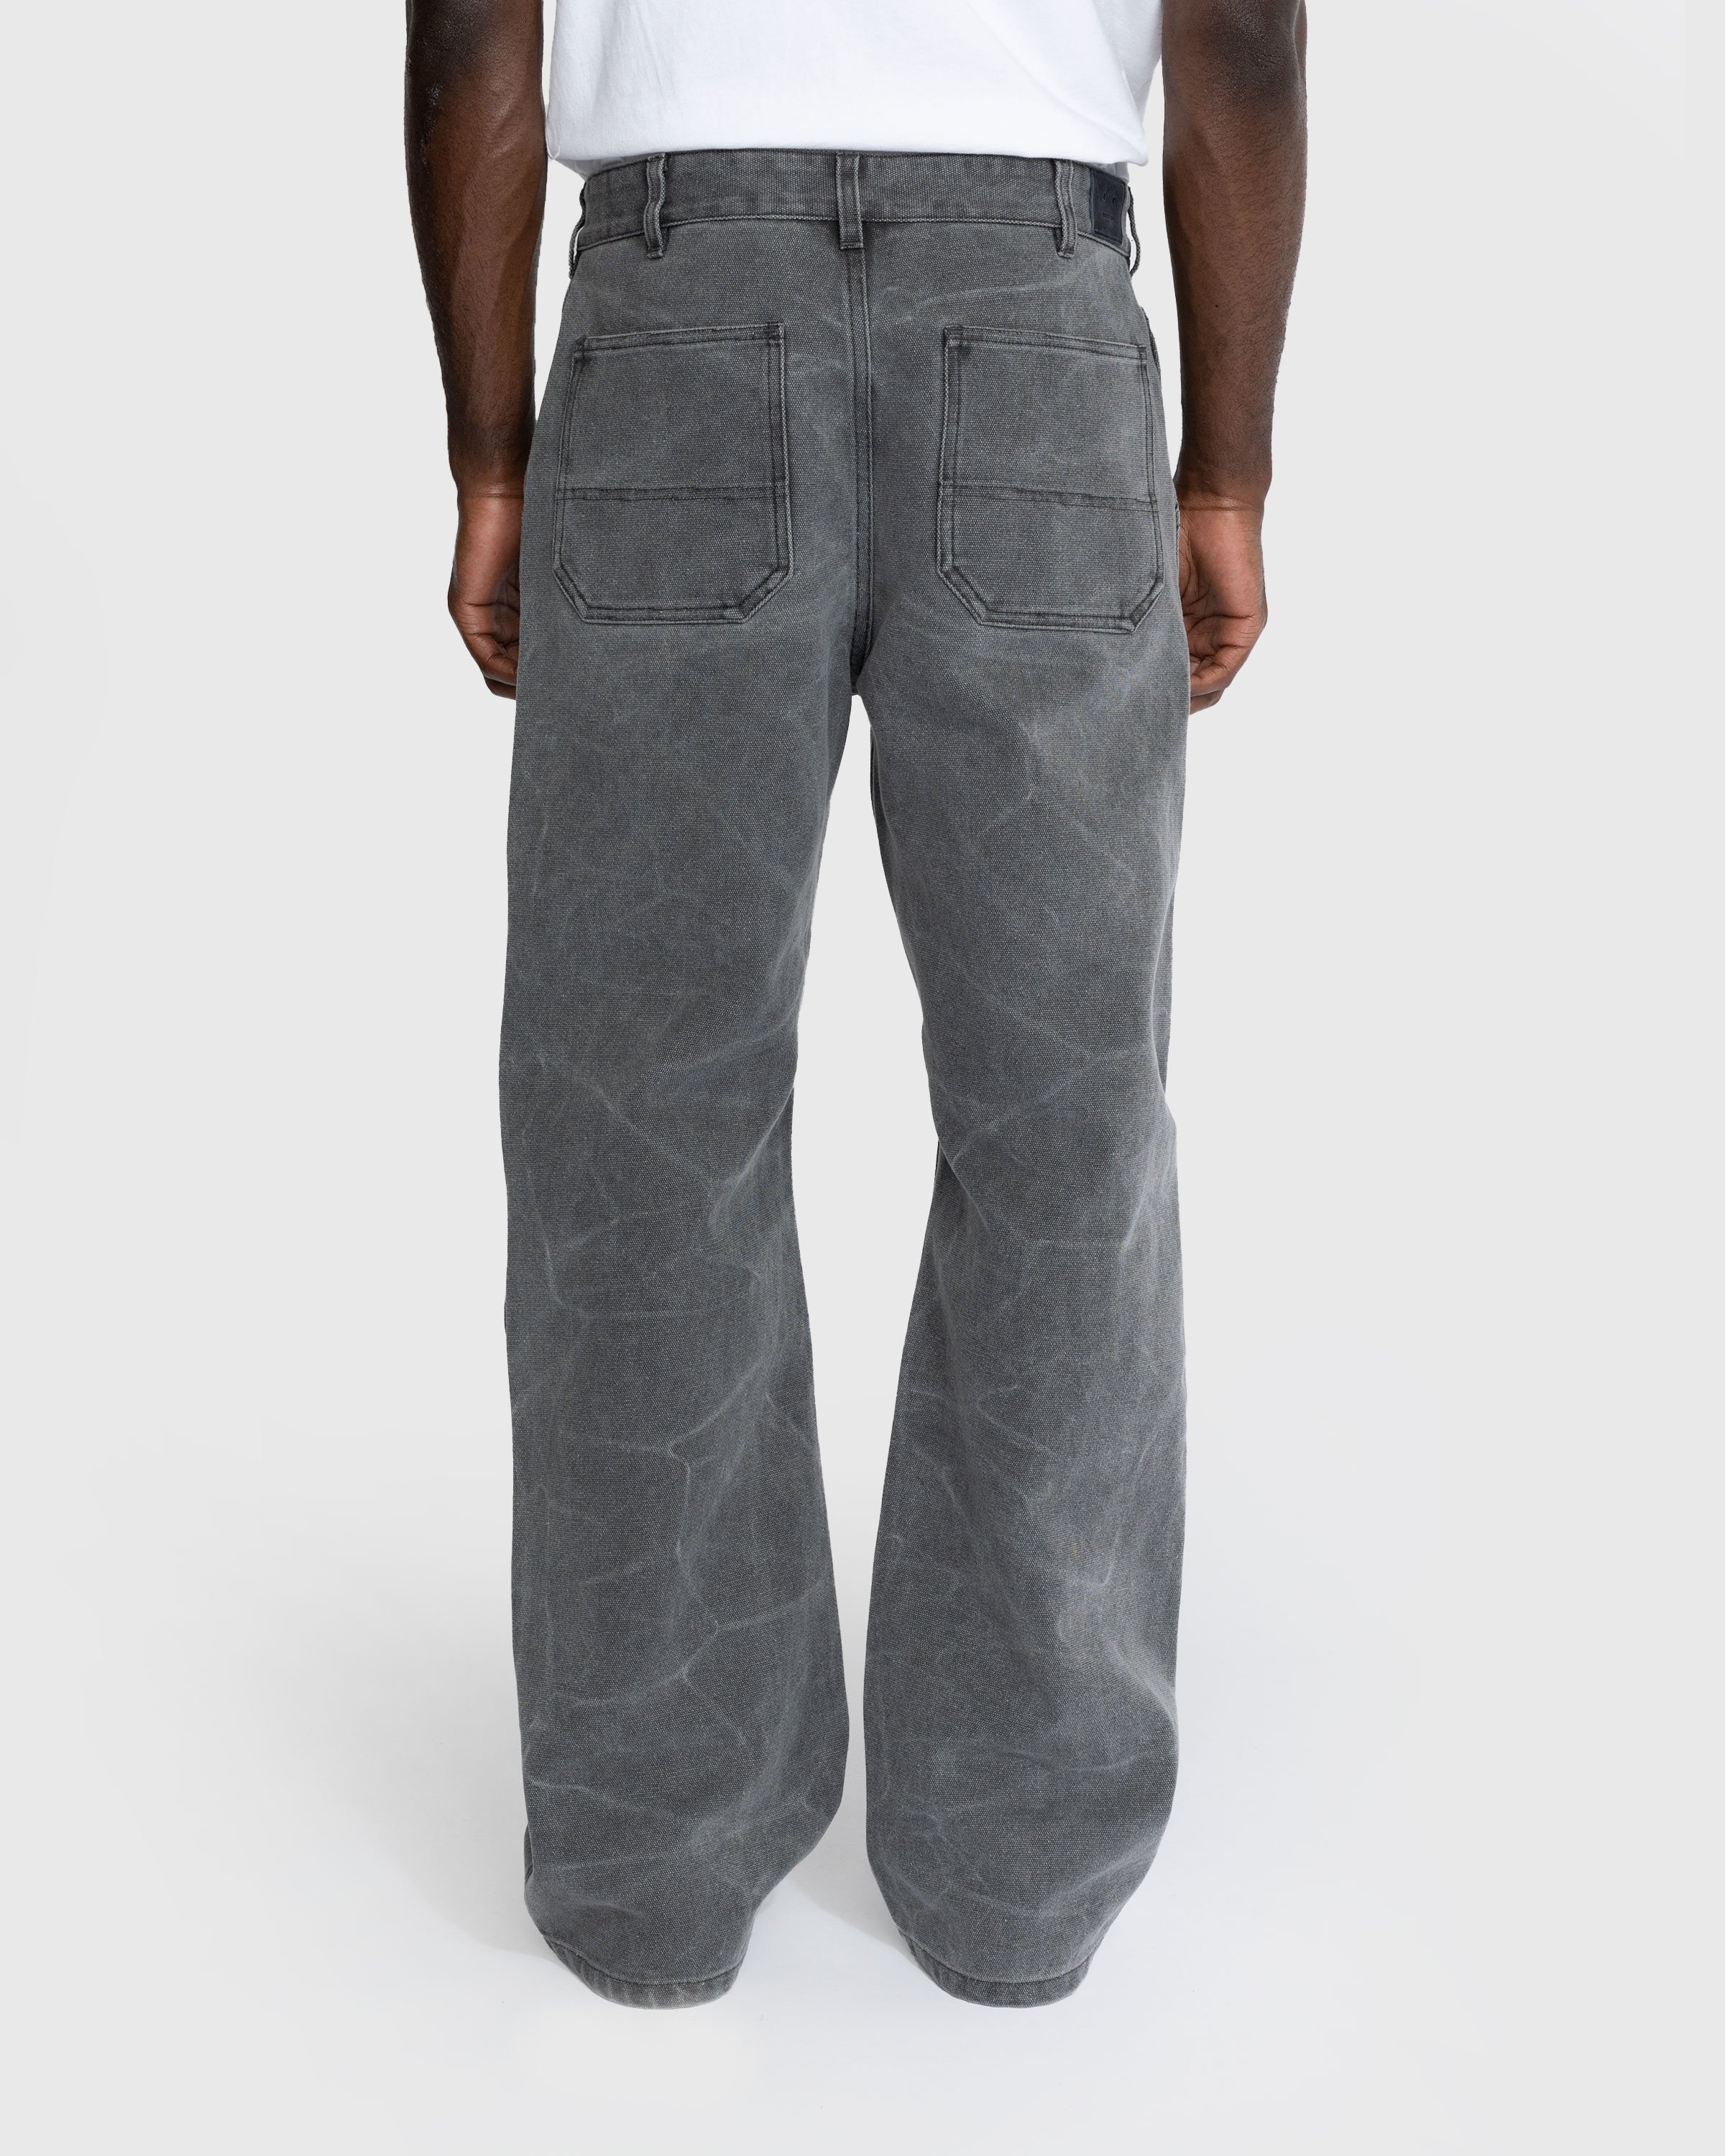 Acne Studios – Cotton Canvas Trousers Grey - Pants - Grey - Image 3